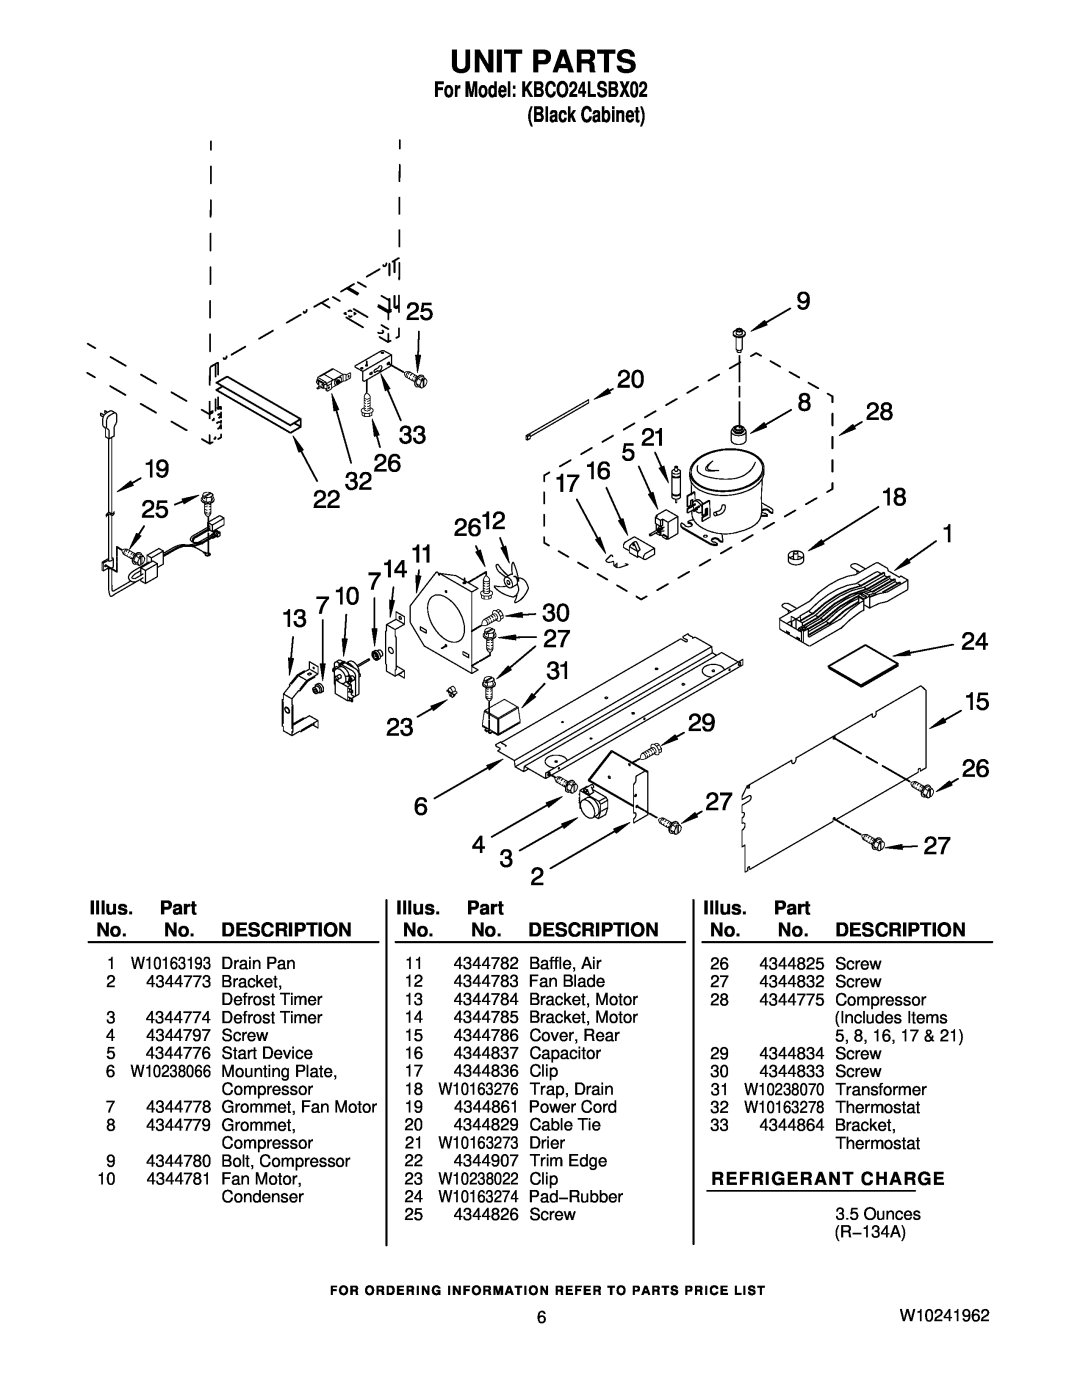 KitchenAid KBCO24LSBX02 manual Unit Parts, Refrigerant Charge, Illus. Part No. No. DESCRIPTION 